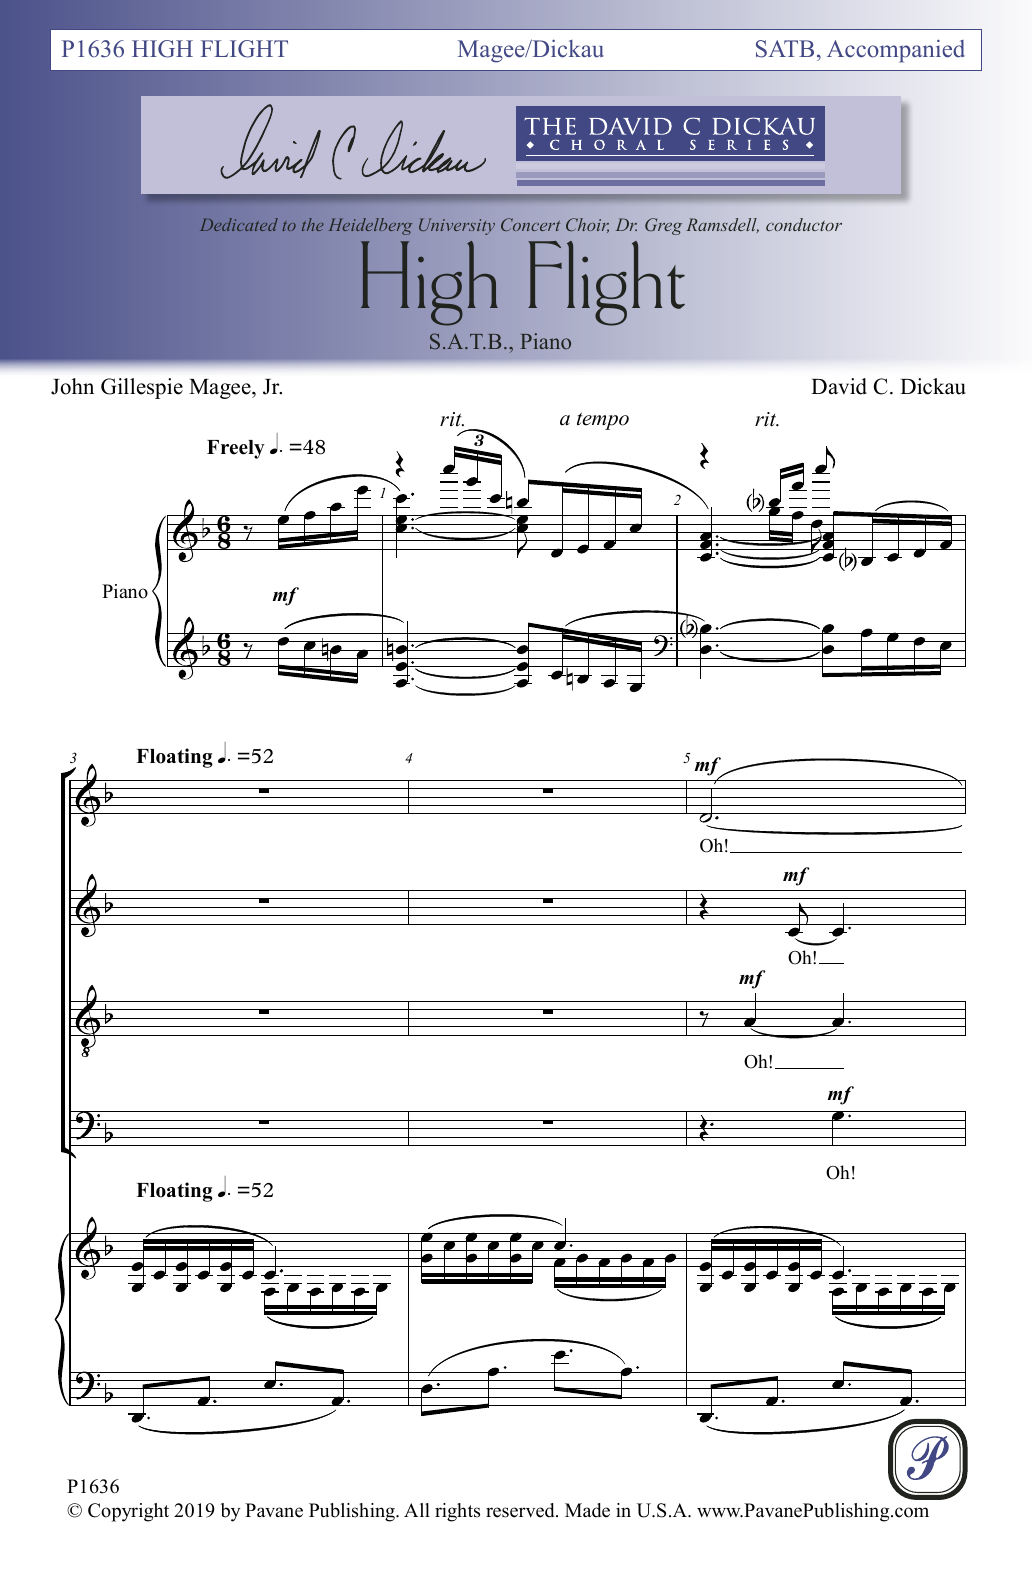 John Gillespie Magee, Jr. and David C. Dickau High Flight Sheet Music Notes & Chords for SATB Choir - Download or Print PDF